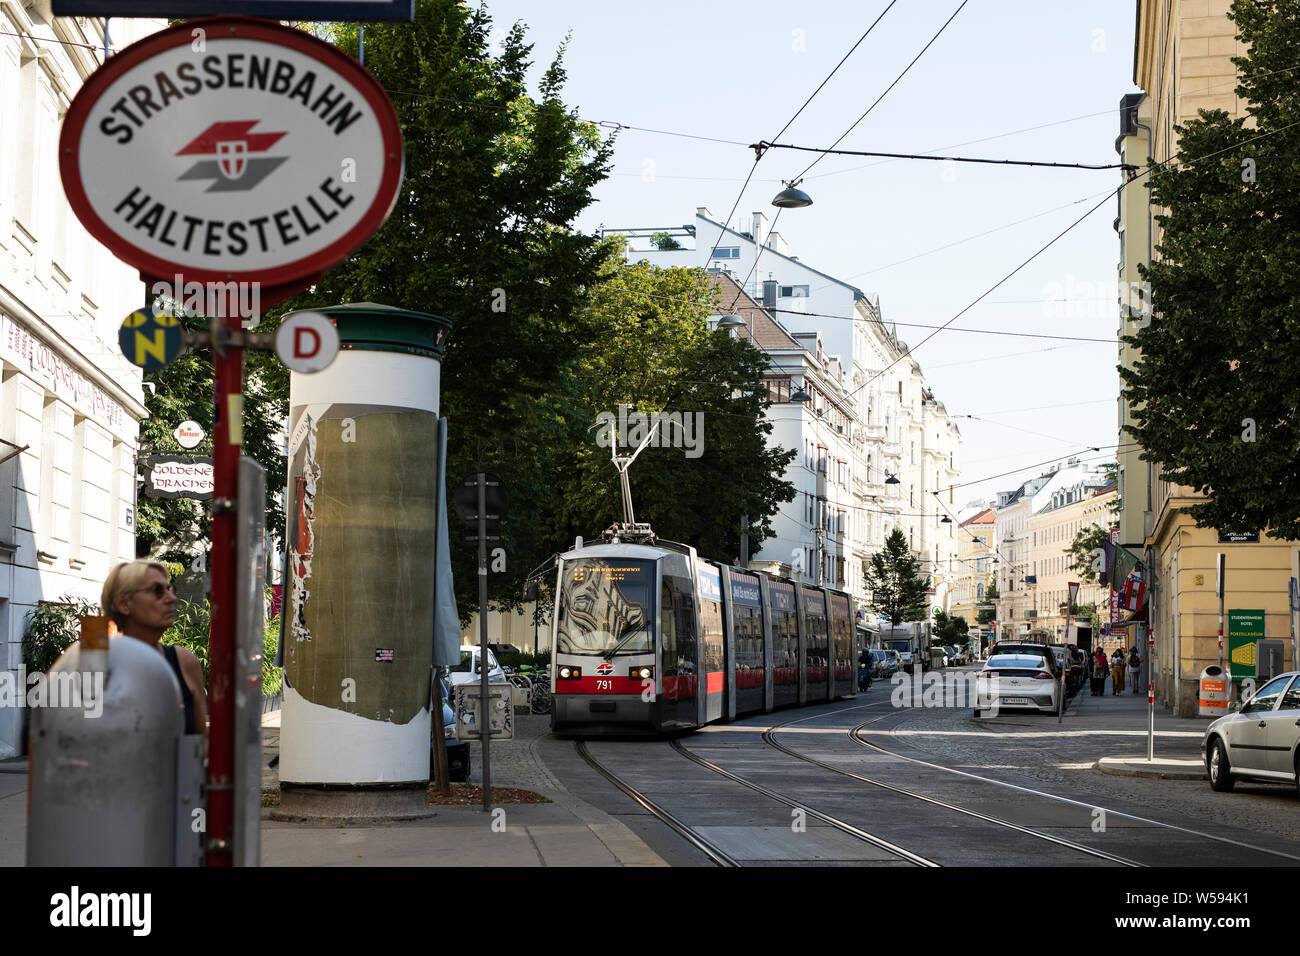 A tram arrives at a stop on Porzellangasse in the Alsergrund neighborhood of Vienna, Austria. Stock Photo